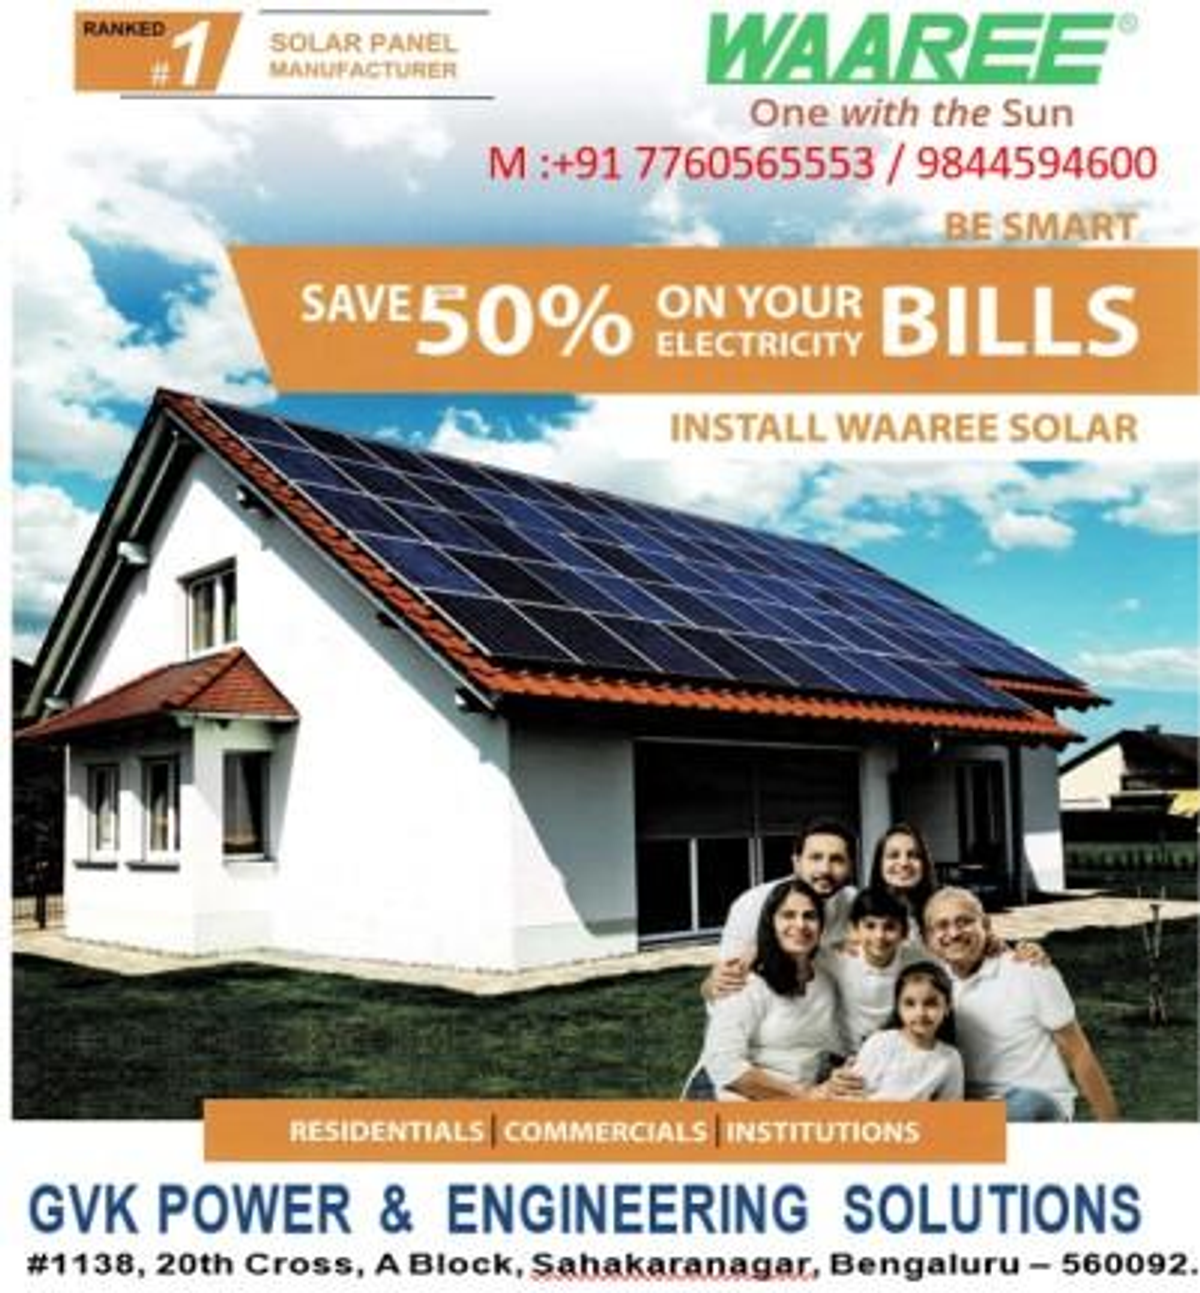 Gvk Power & Engineering Solutions